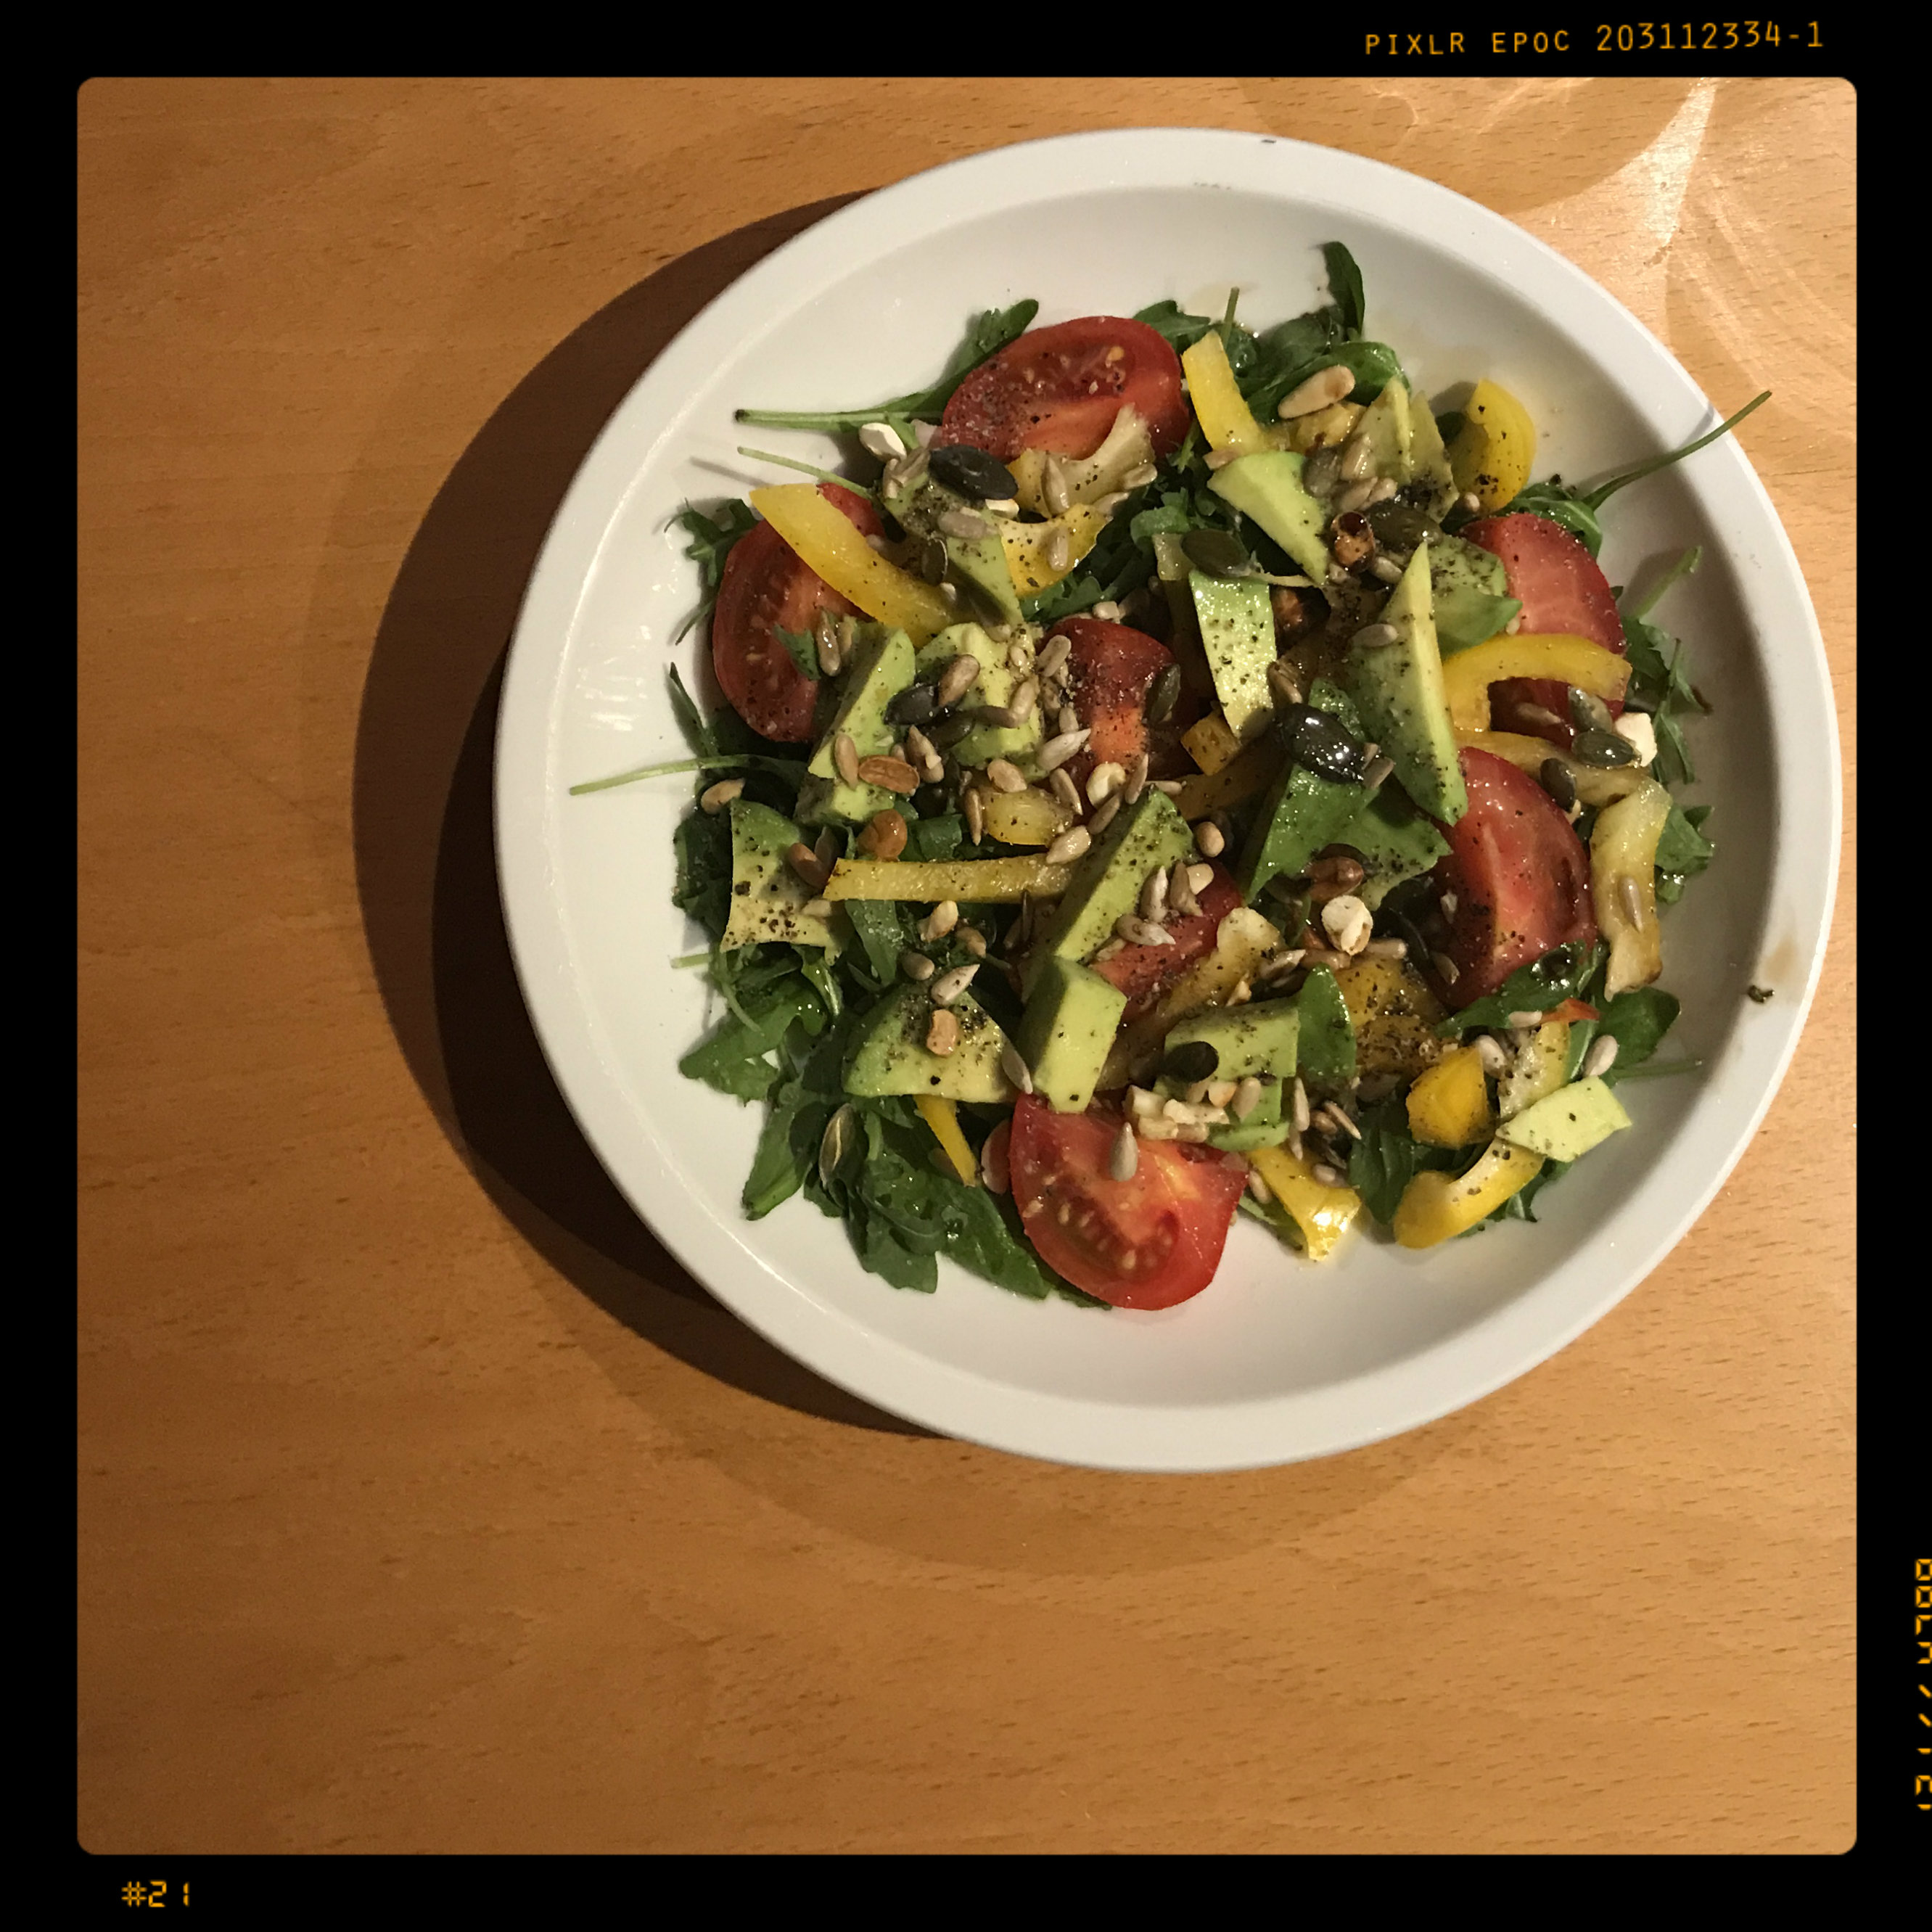 Rucola-Salat mit Avocado – Schlemm dich fit!